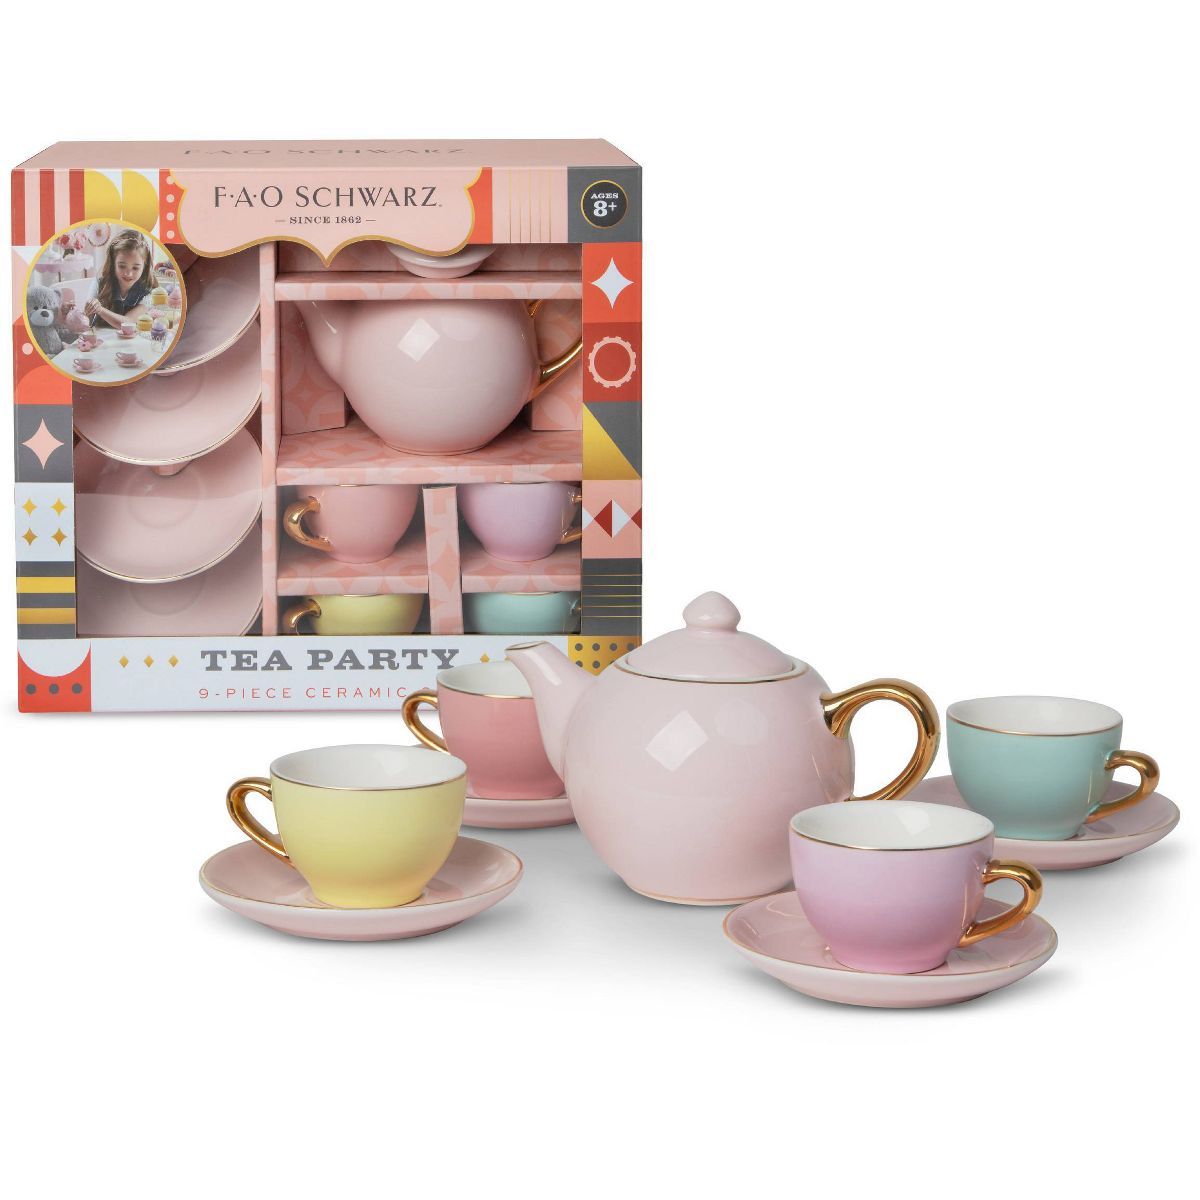 FAO Schwarz Hand-Glazed Ceramic Tea Party Set - 9pc | Target